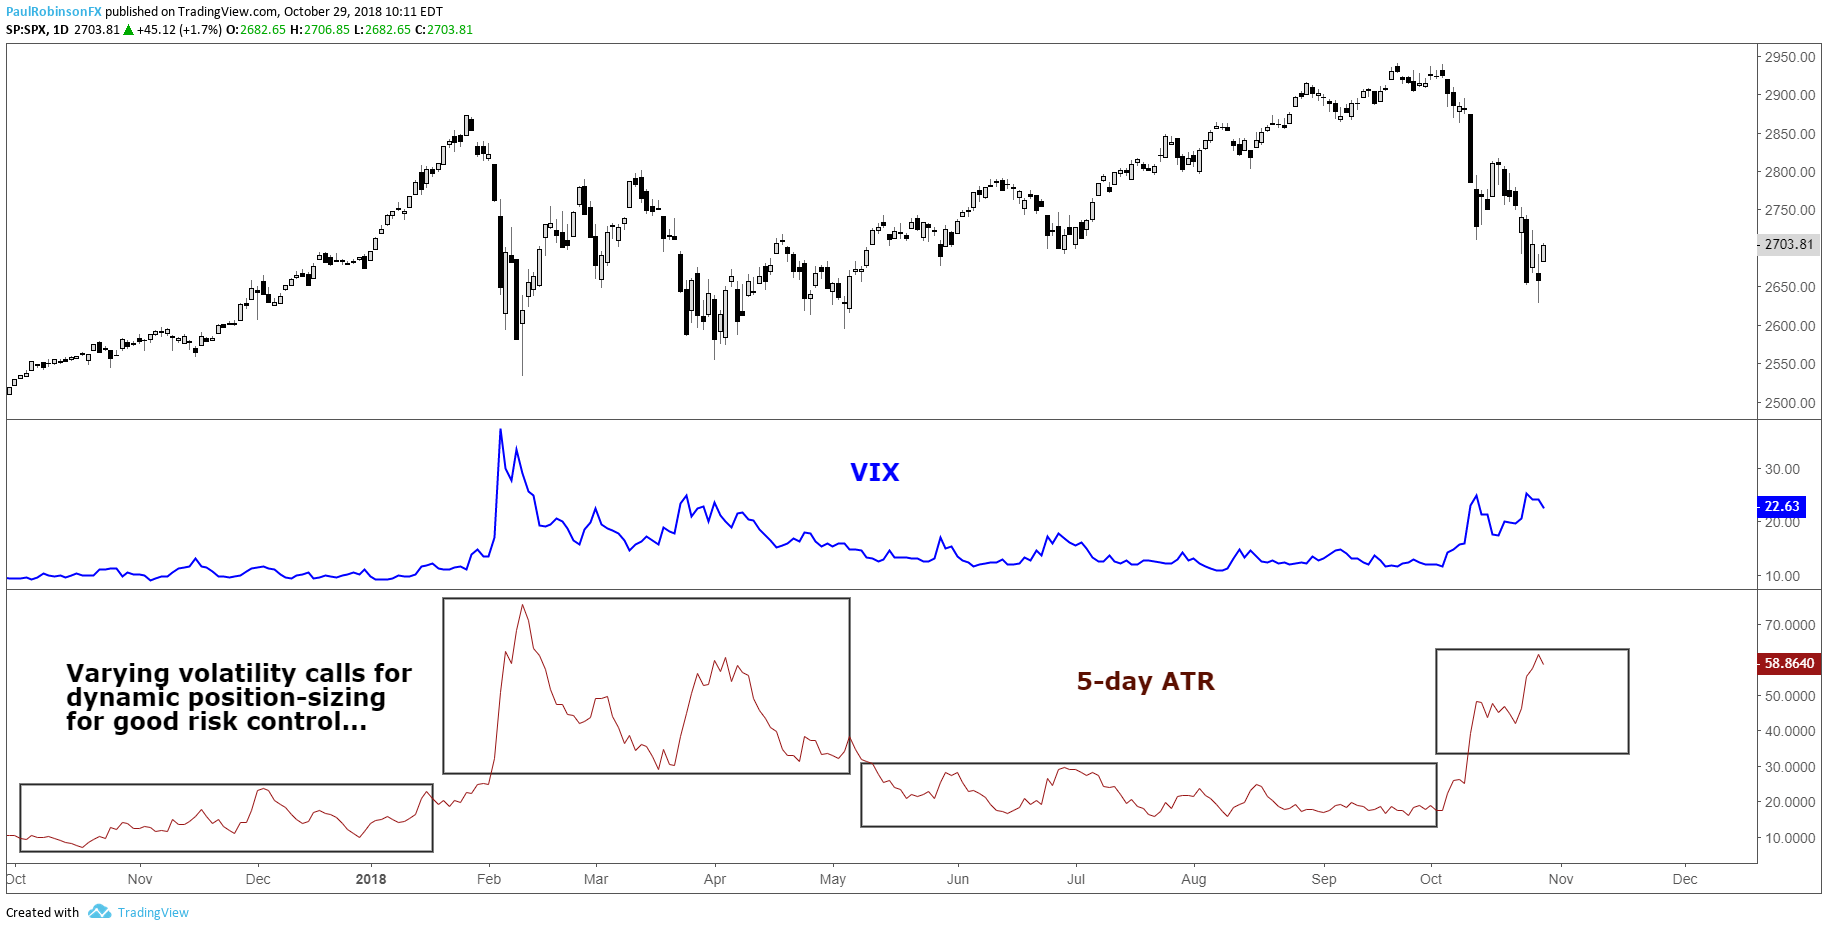 s p 500 low volatility index